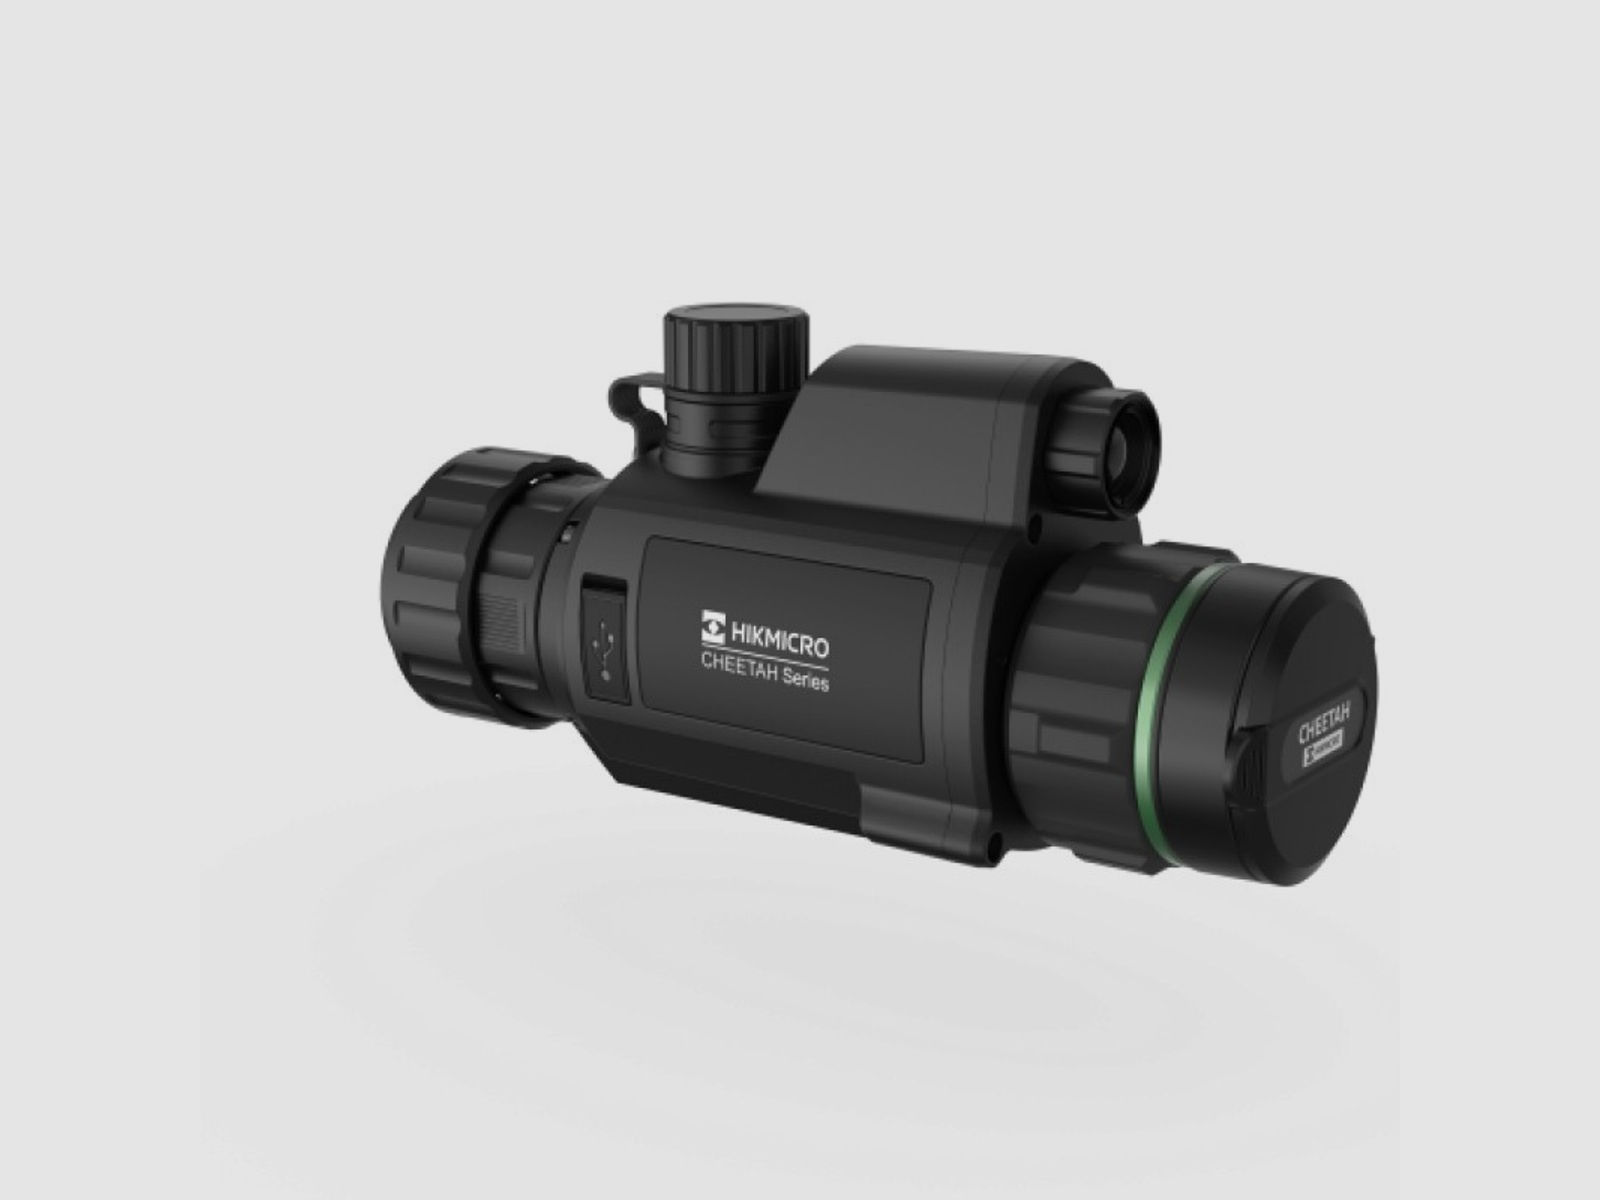 Hikmicro Clip-On Cheetah C32F 850nm Nachtsichtgerät / Vorsatzgerät